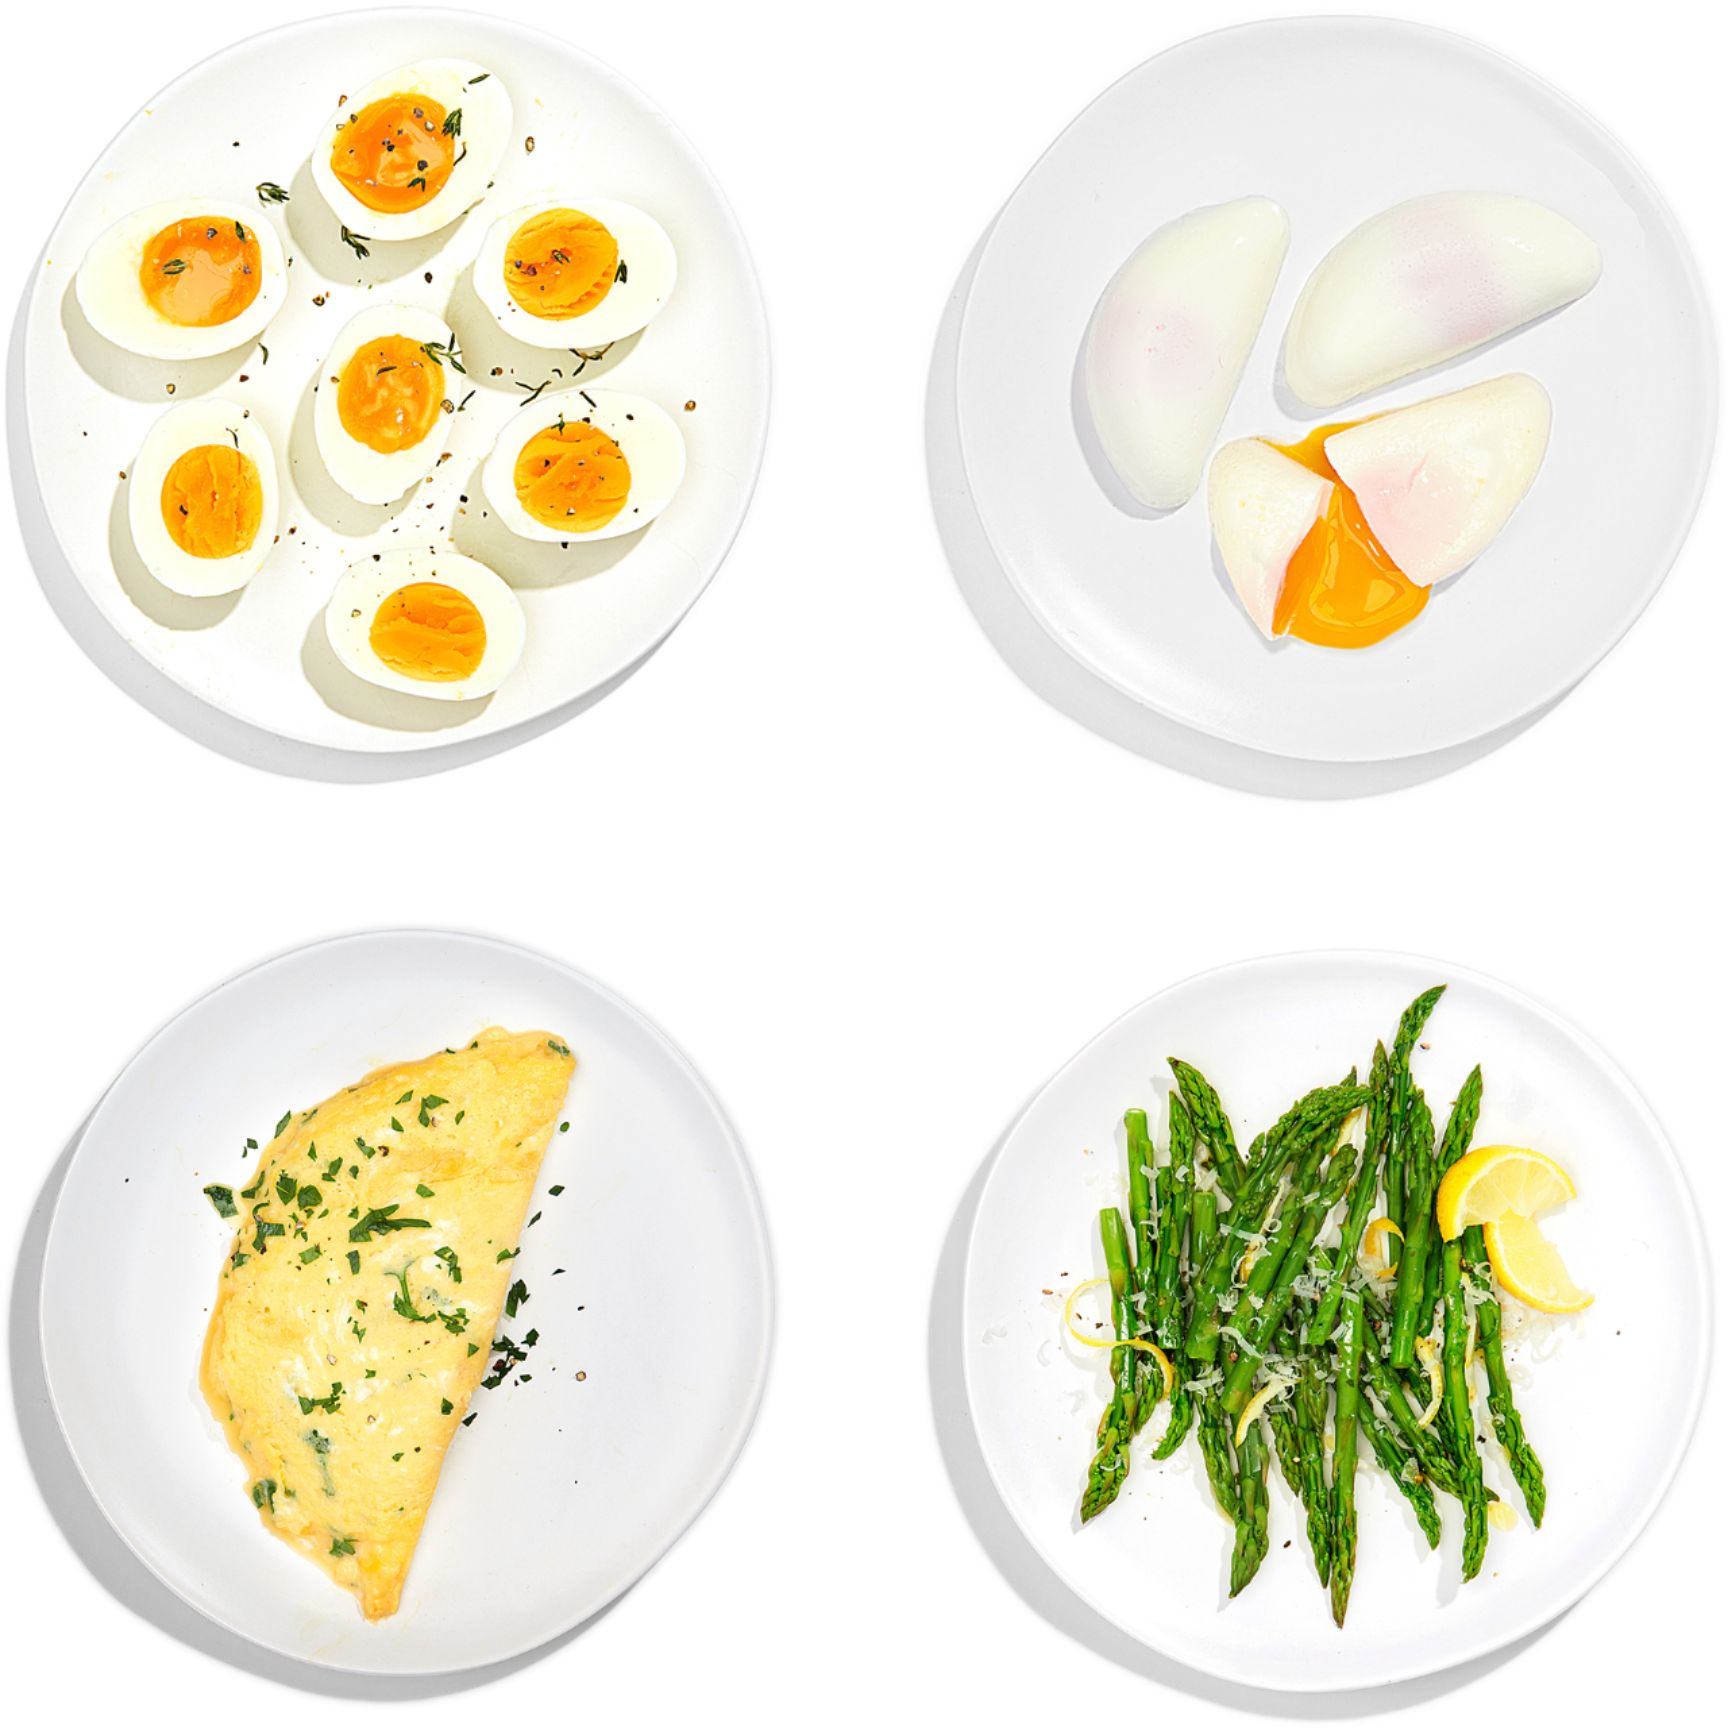 Best Buy: Chefman Electric Egg Cooker + Boiler, Quickly Makes 6